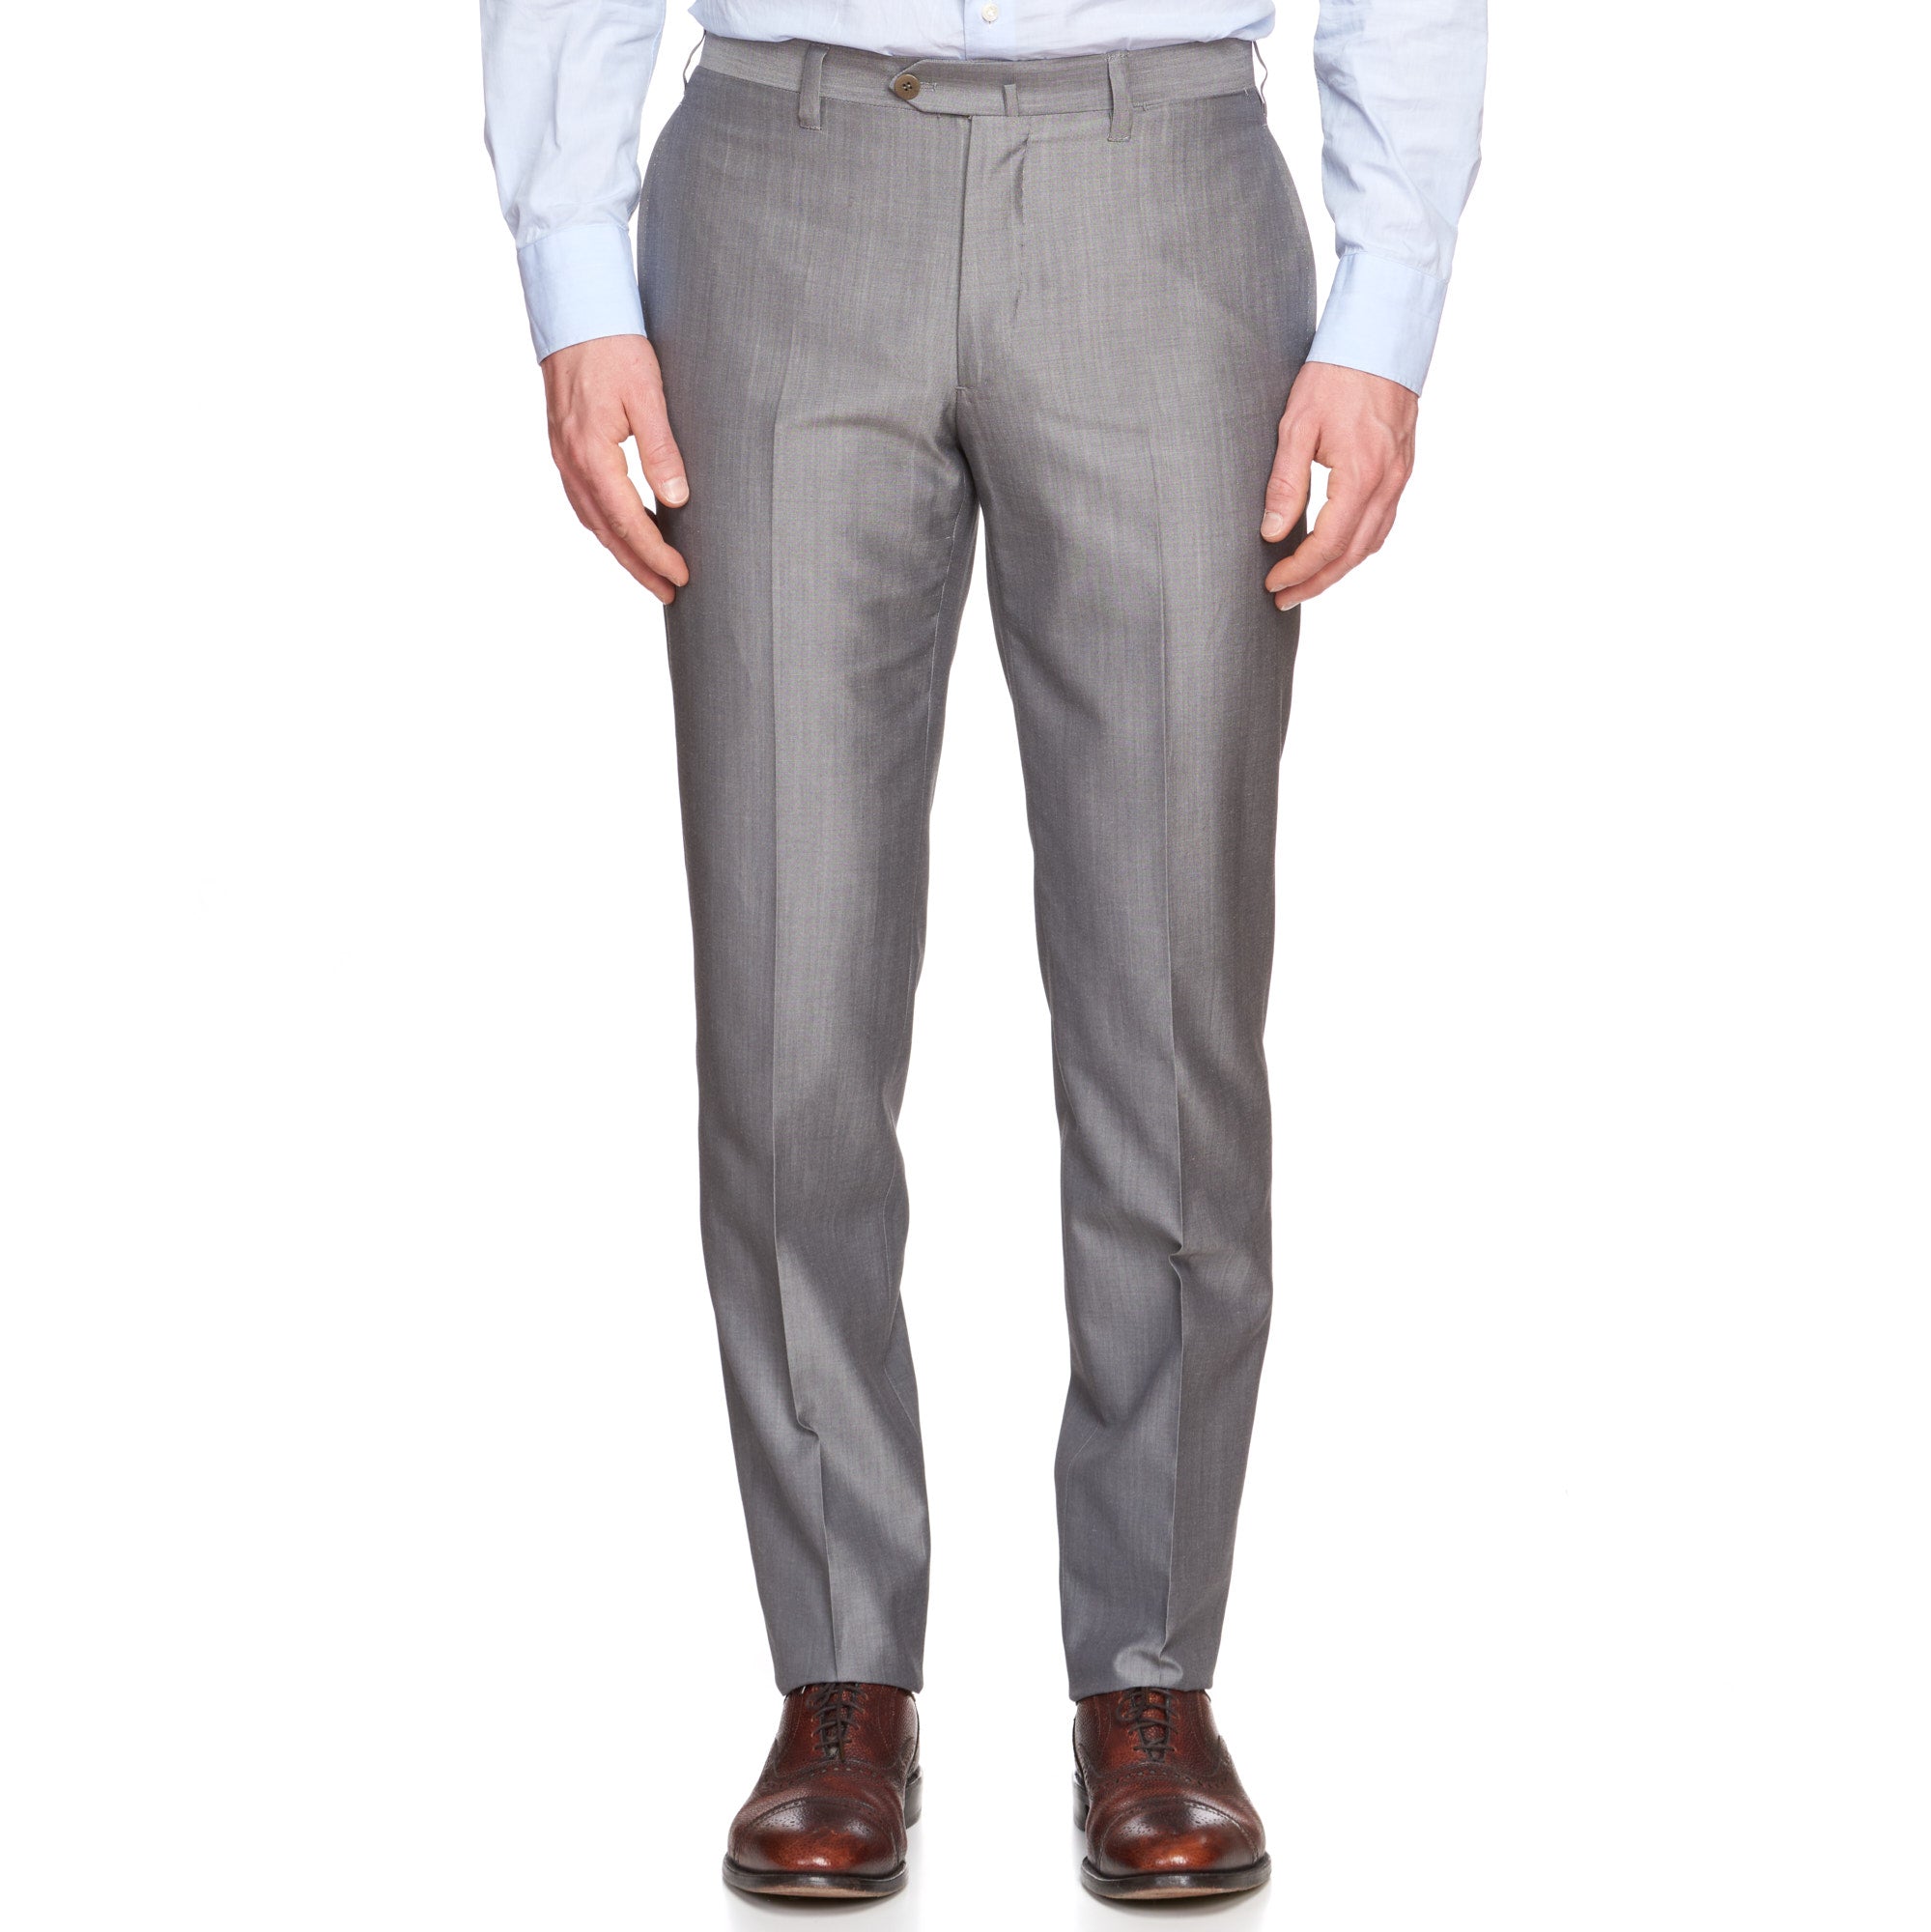 CESARE ATTOLINI Handmade Gray Cotton-Wool Super 120's Peak Lapel Suit NEW